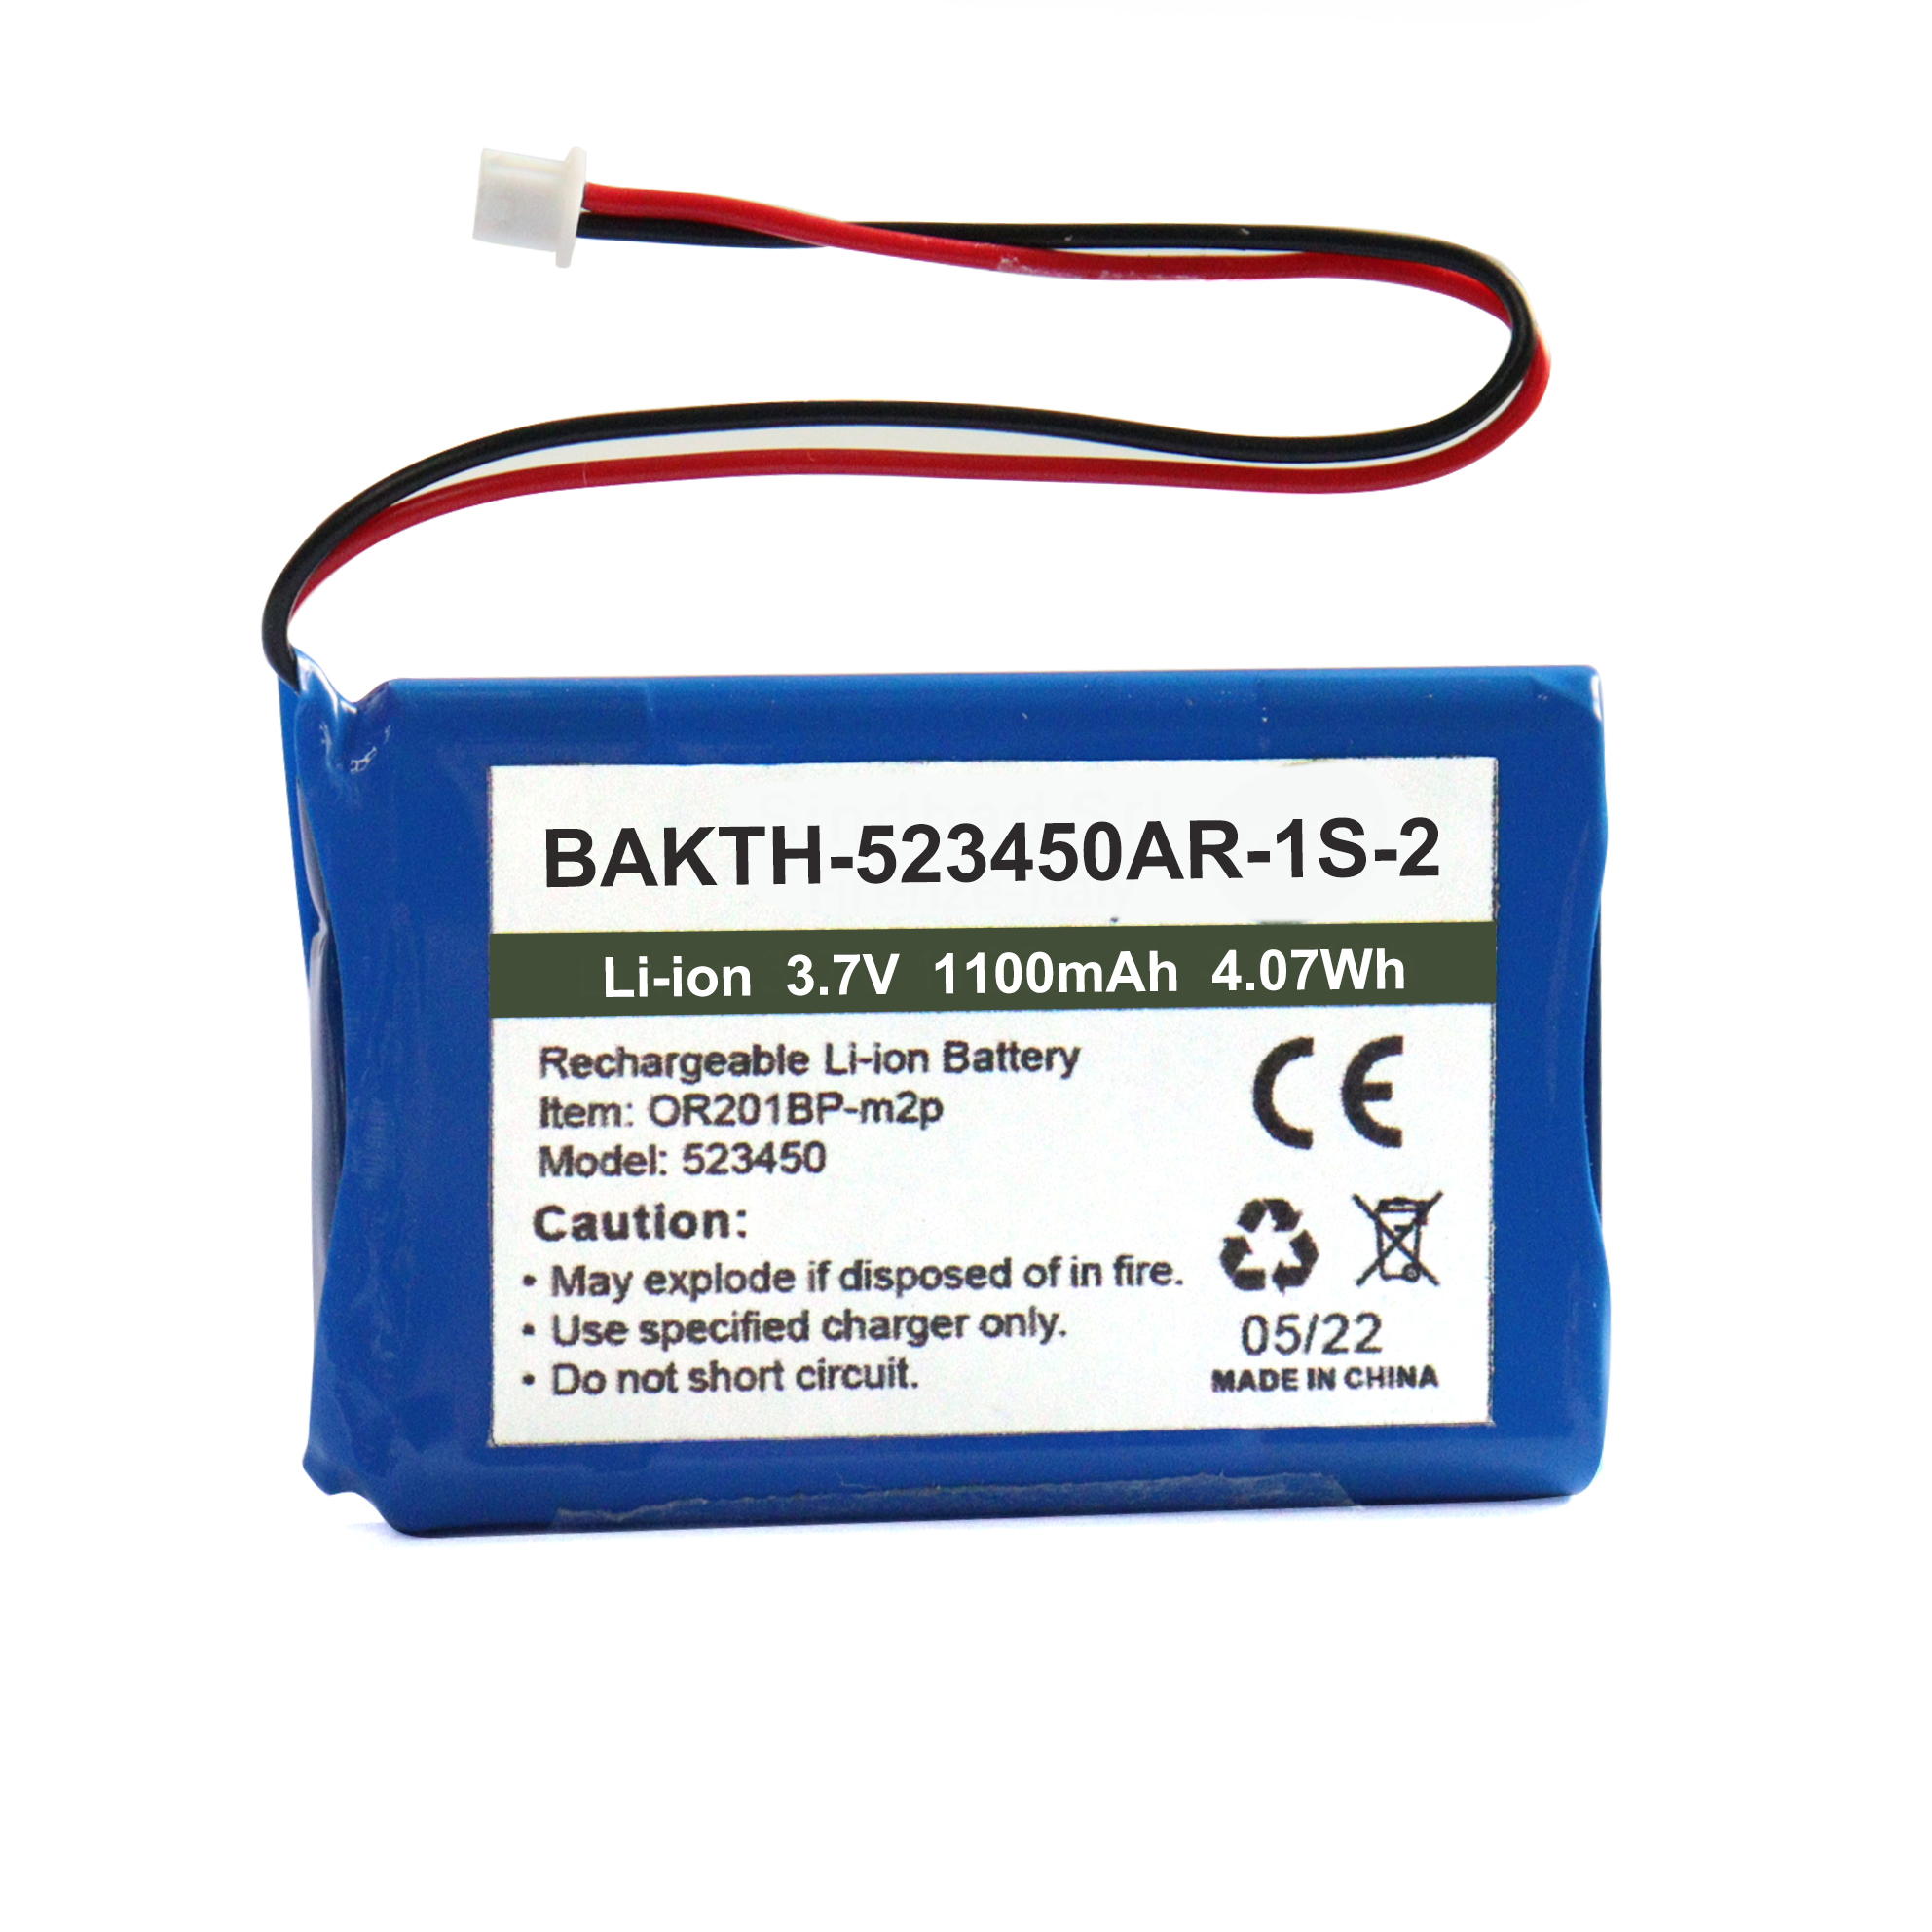 Bakth-523450AR-1S-2 3.7V 1800mAh锂离子电池组可充电电池组，用于可穿戴设备